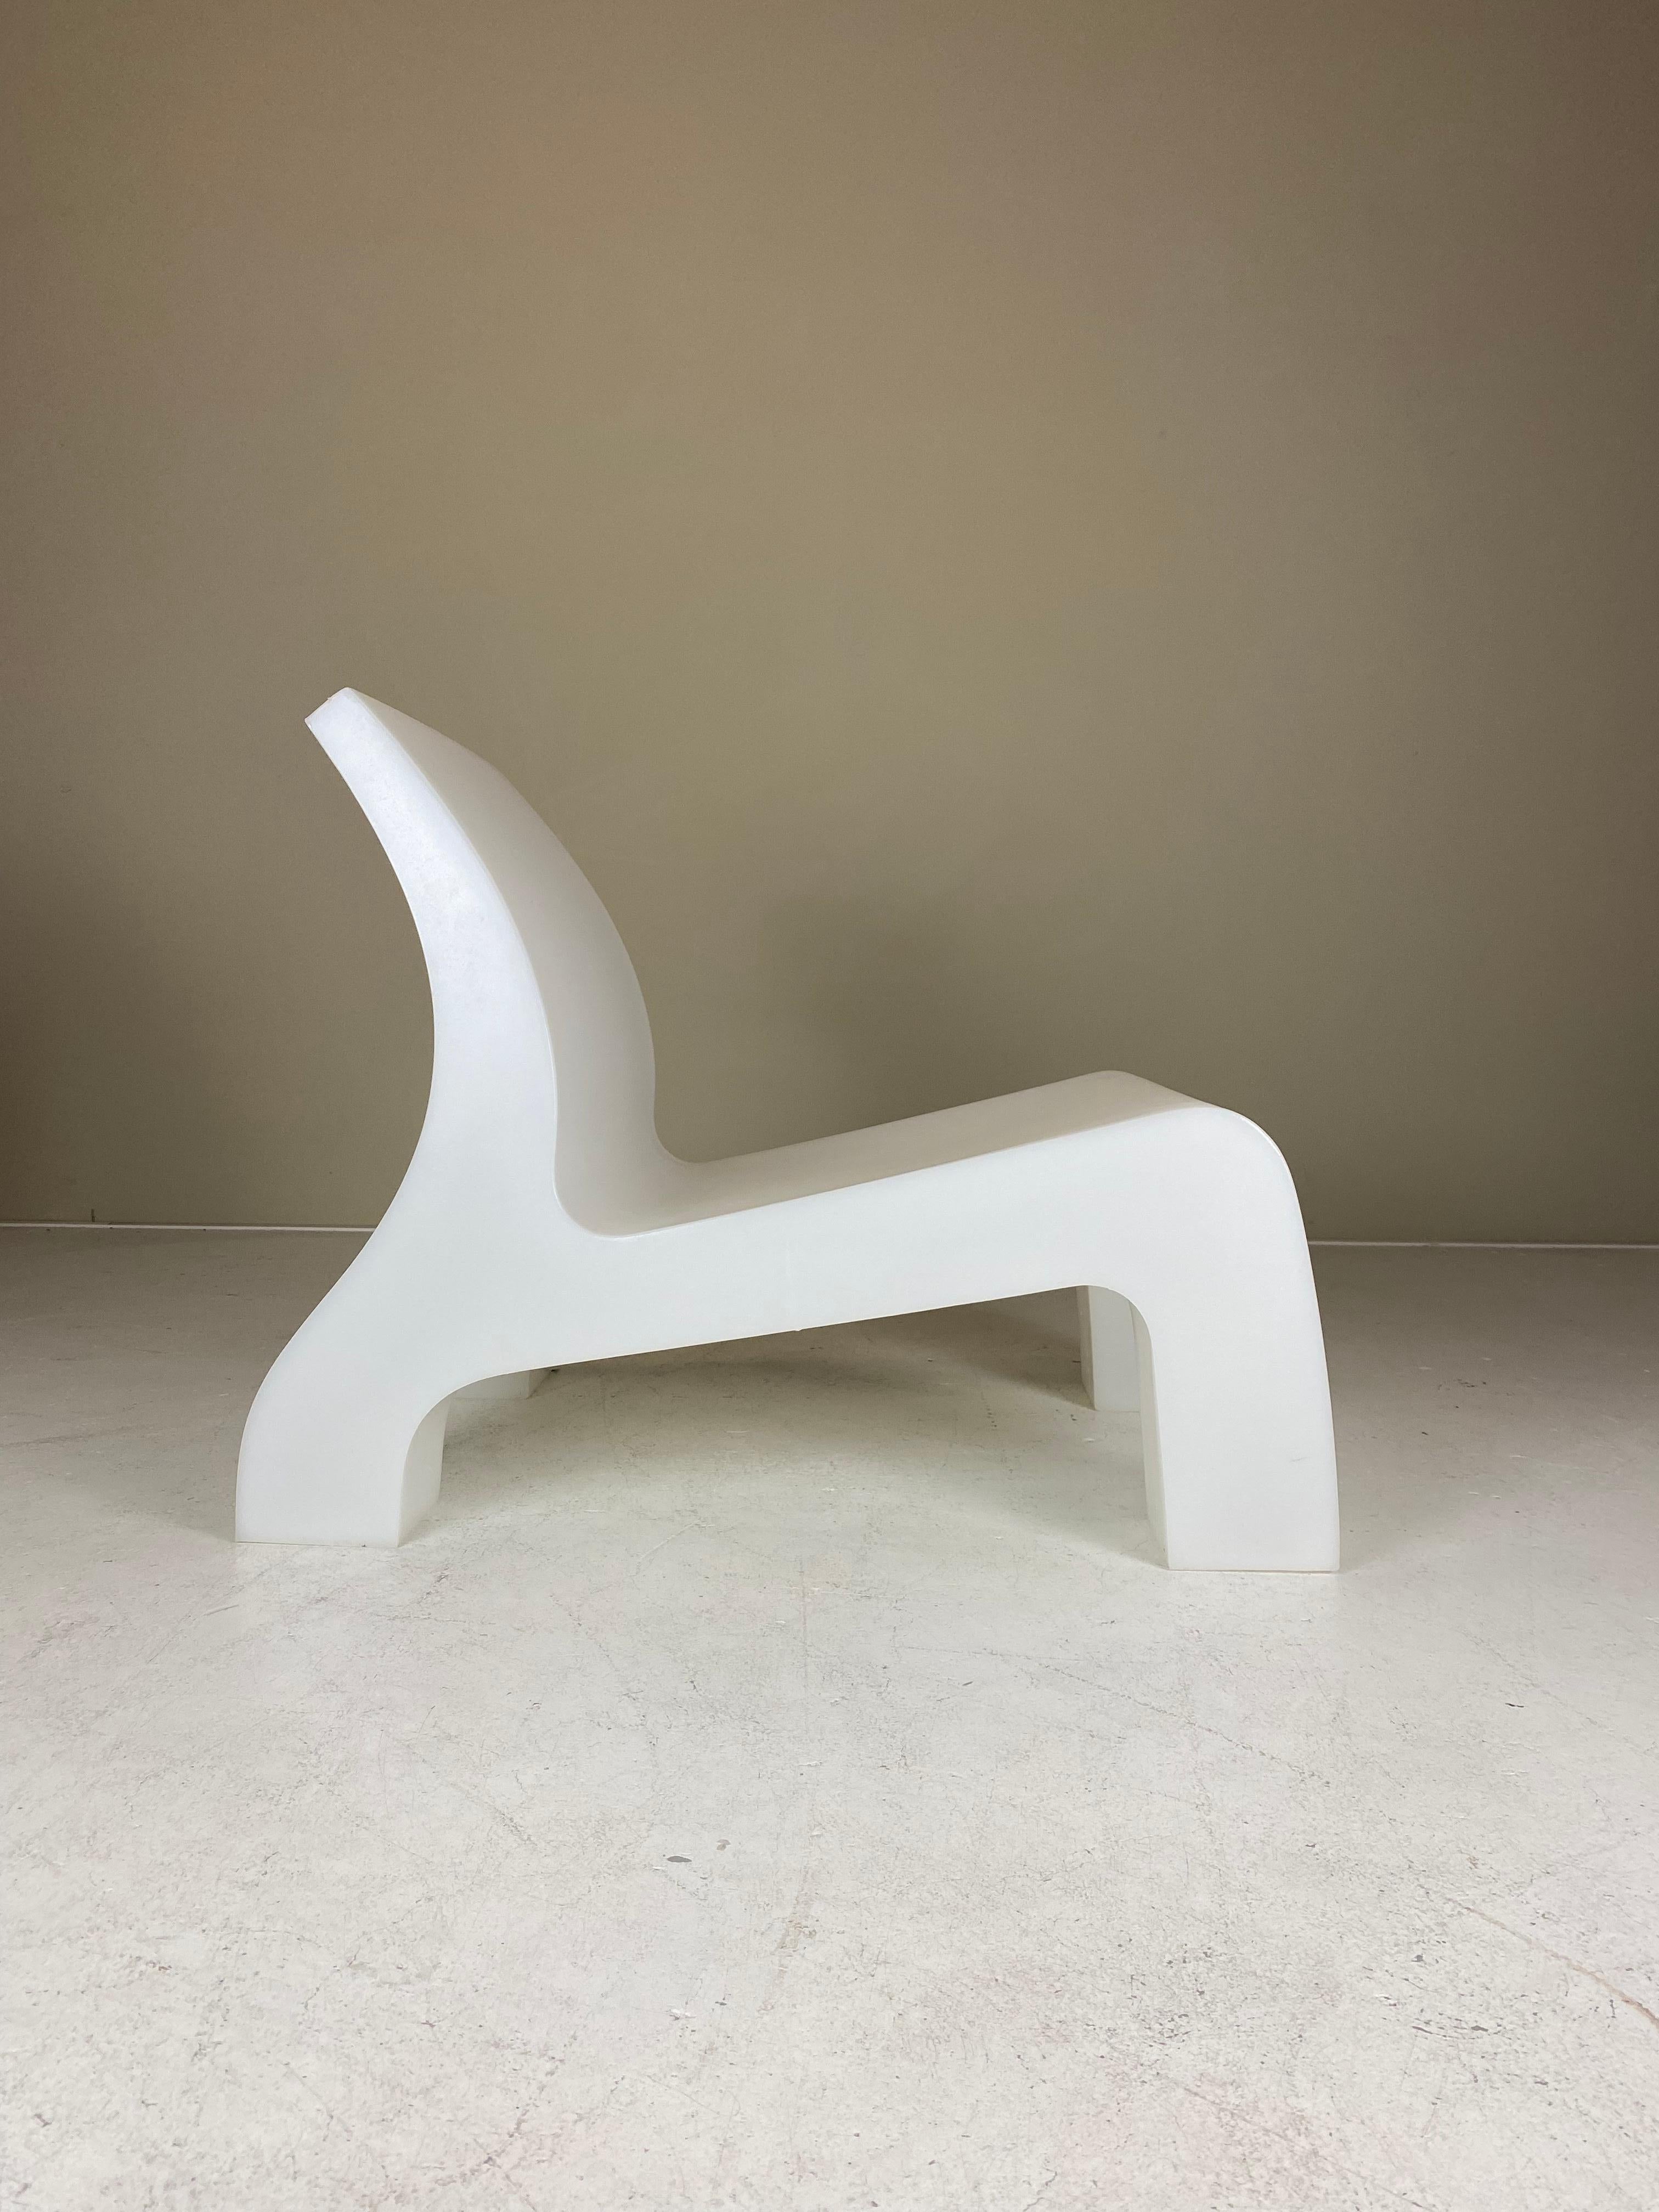 rhino chair model